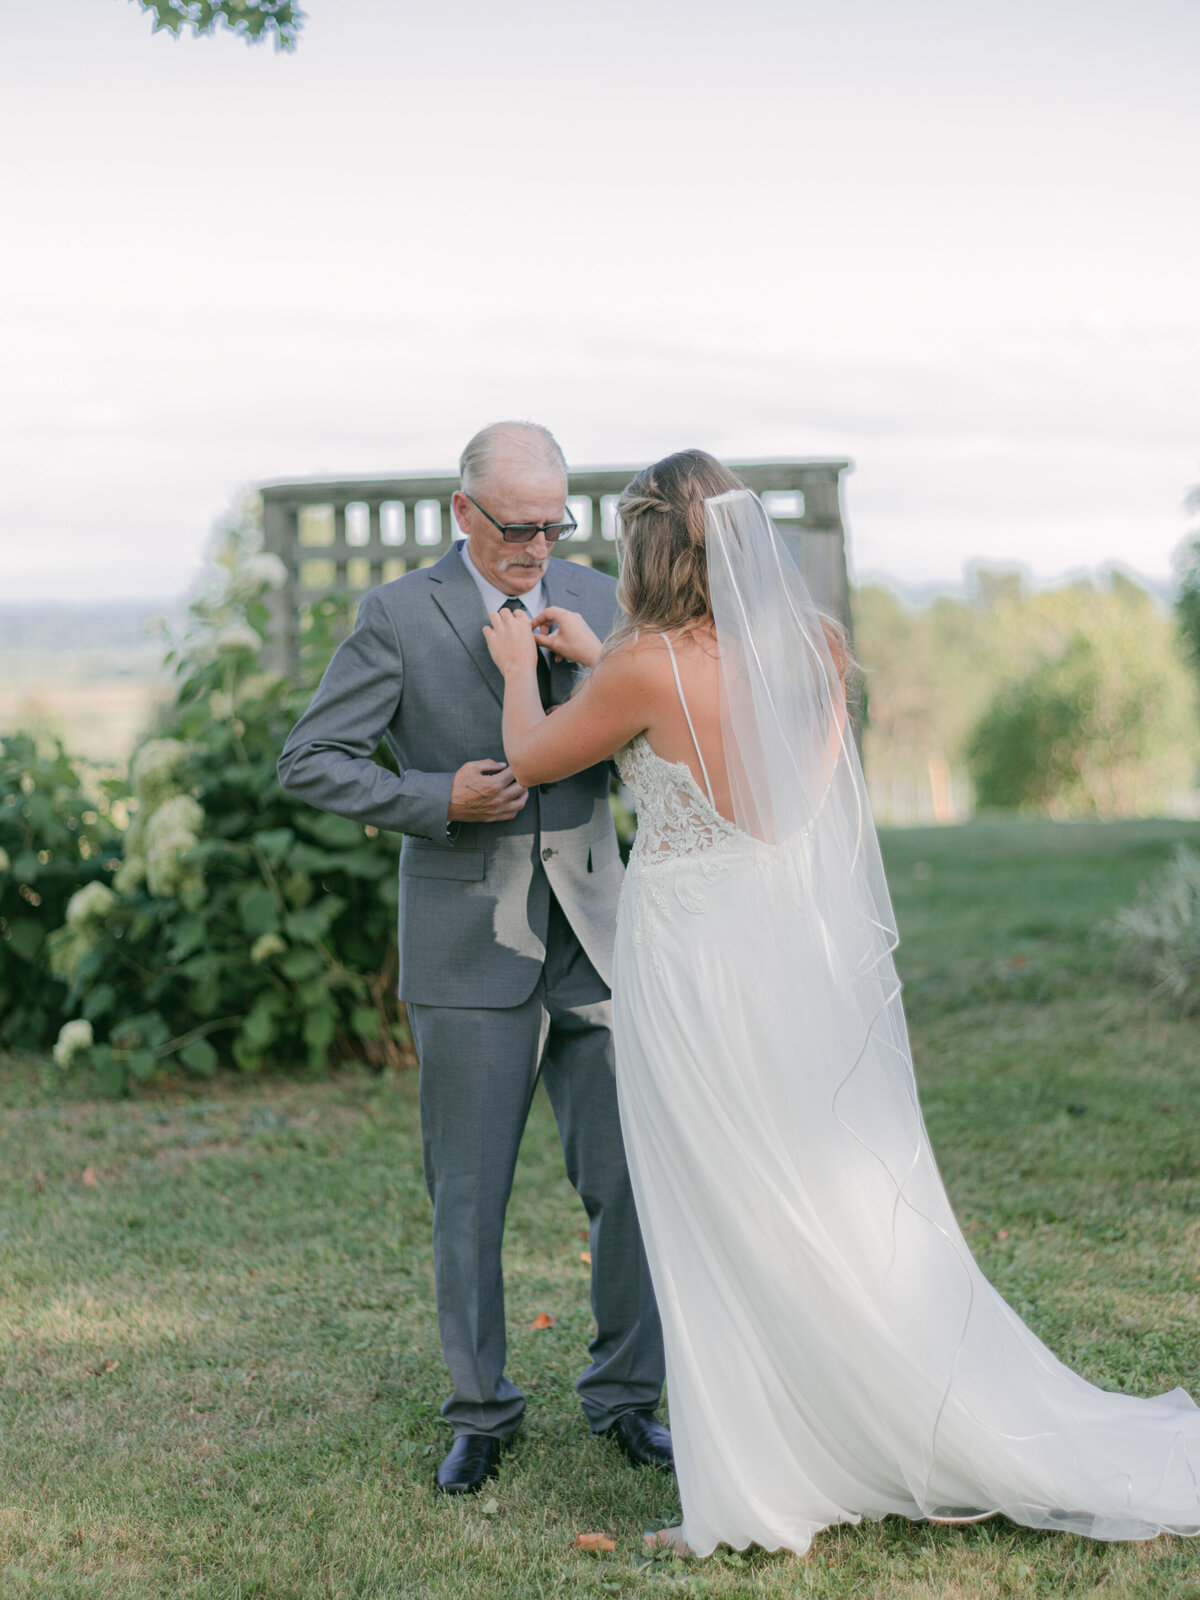 Jacqueline Anne Photography - Halifax Wedding Photographer - Samantha and Greg-306